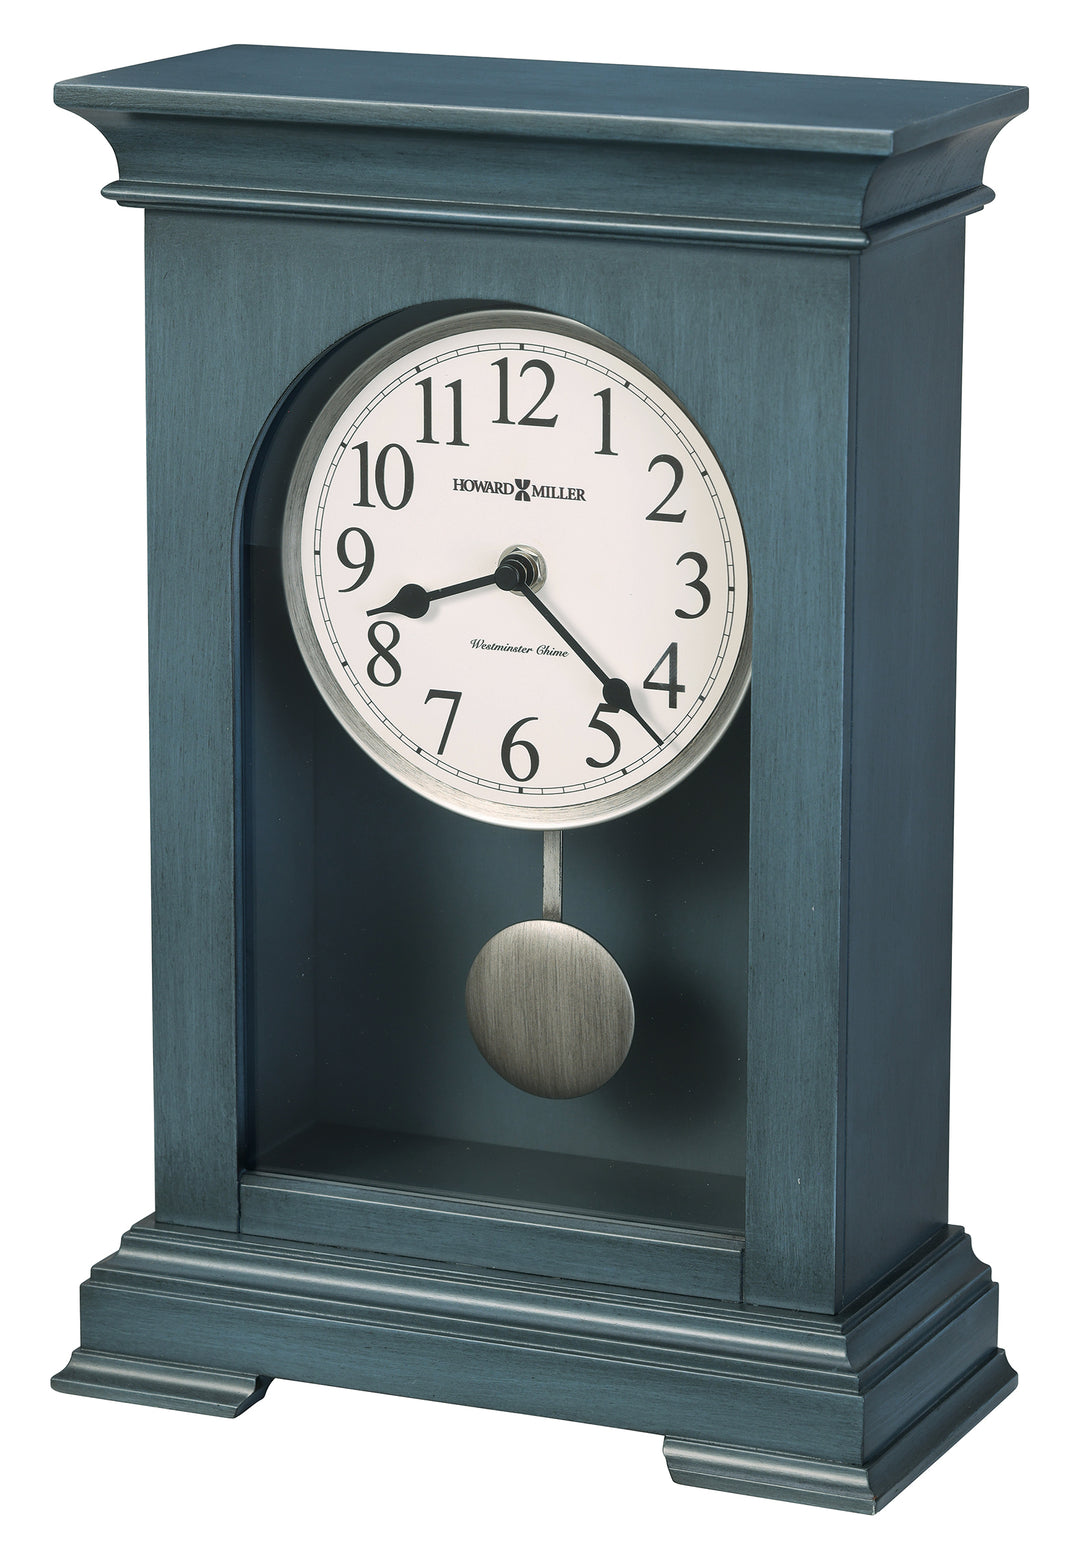 Loreen Mantel Clock by Howard Miller